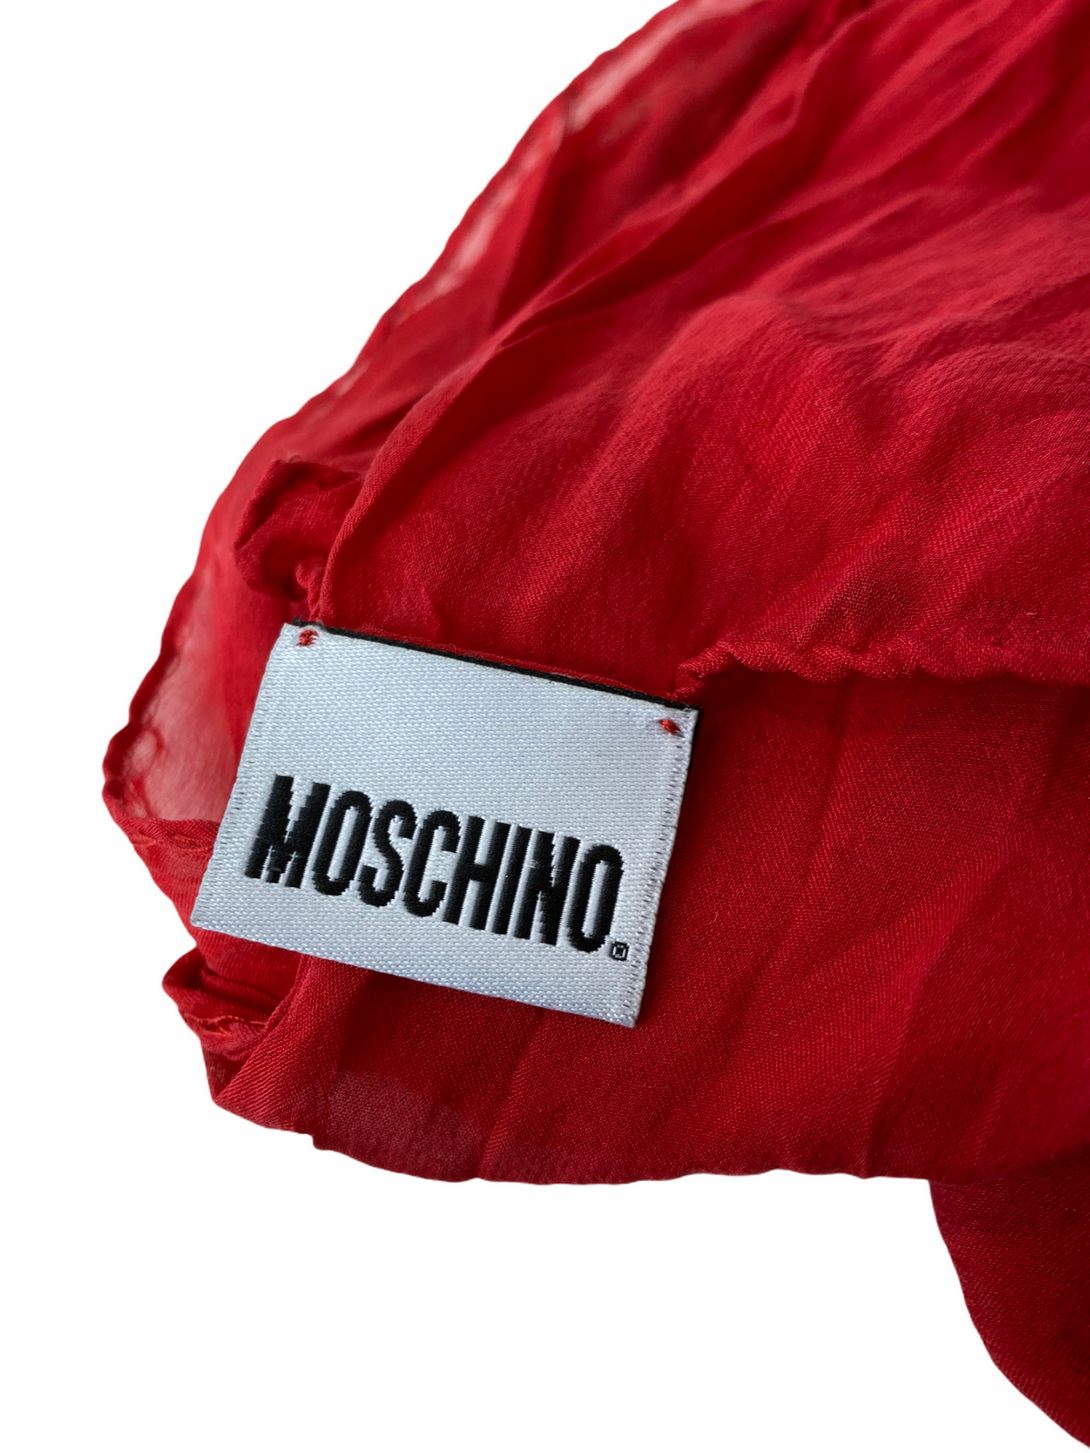 Moschino Red 100% Silk Scarf- As seen on Instagram 10/02/21 – Siopaella ...